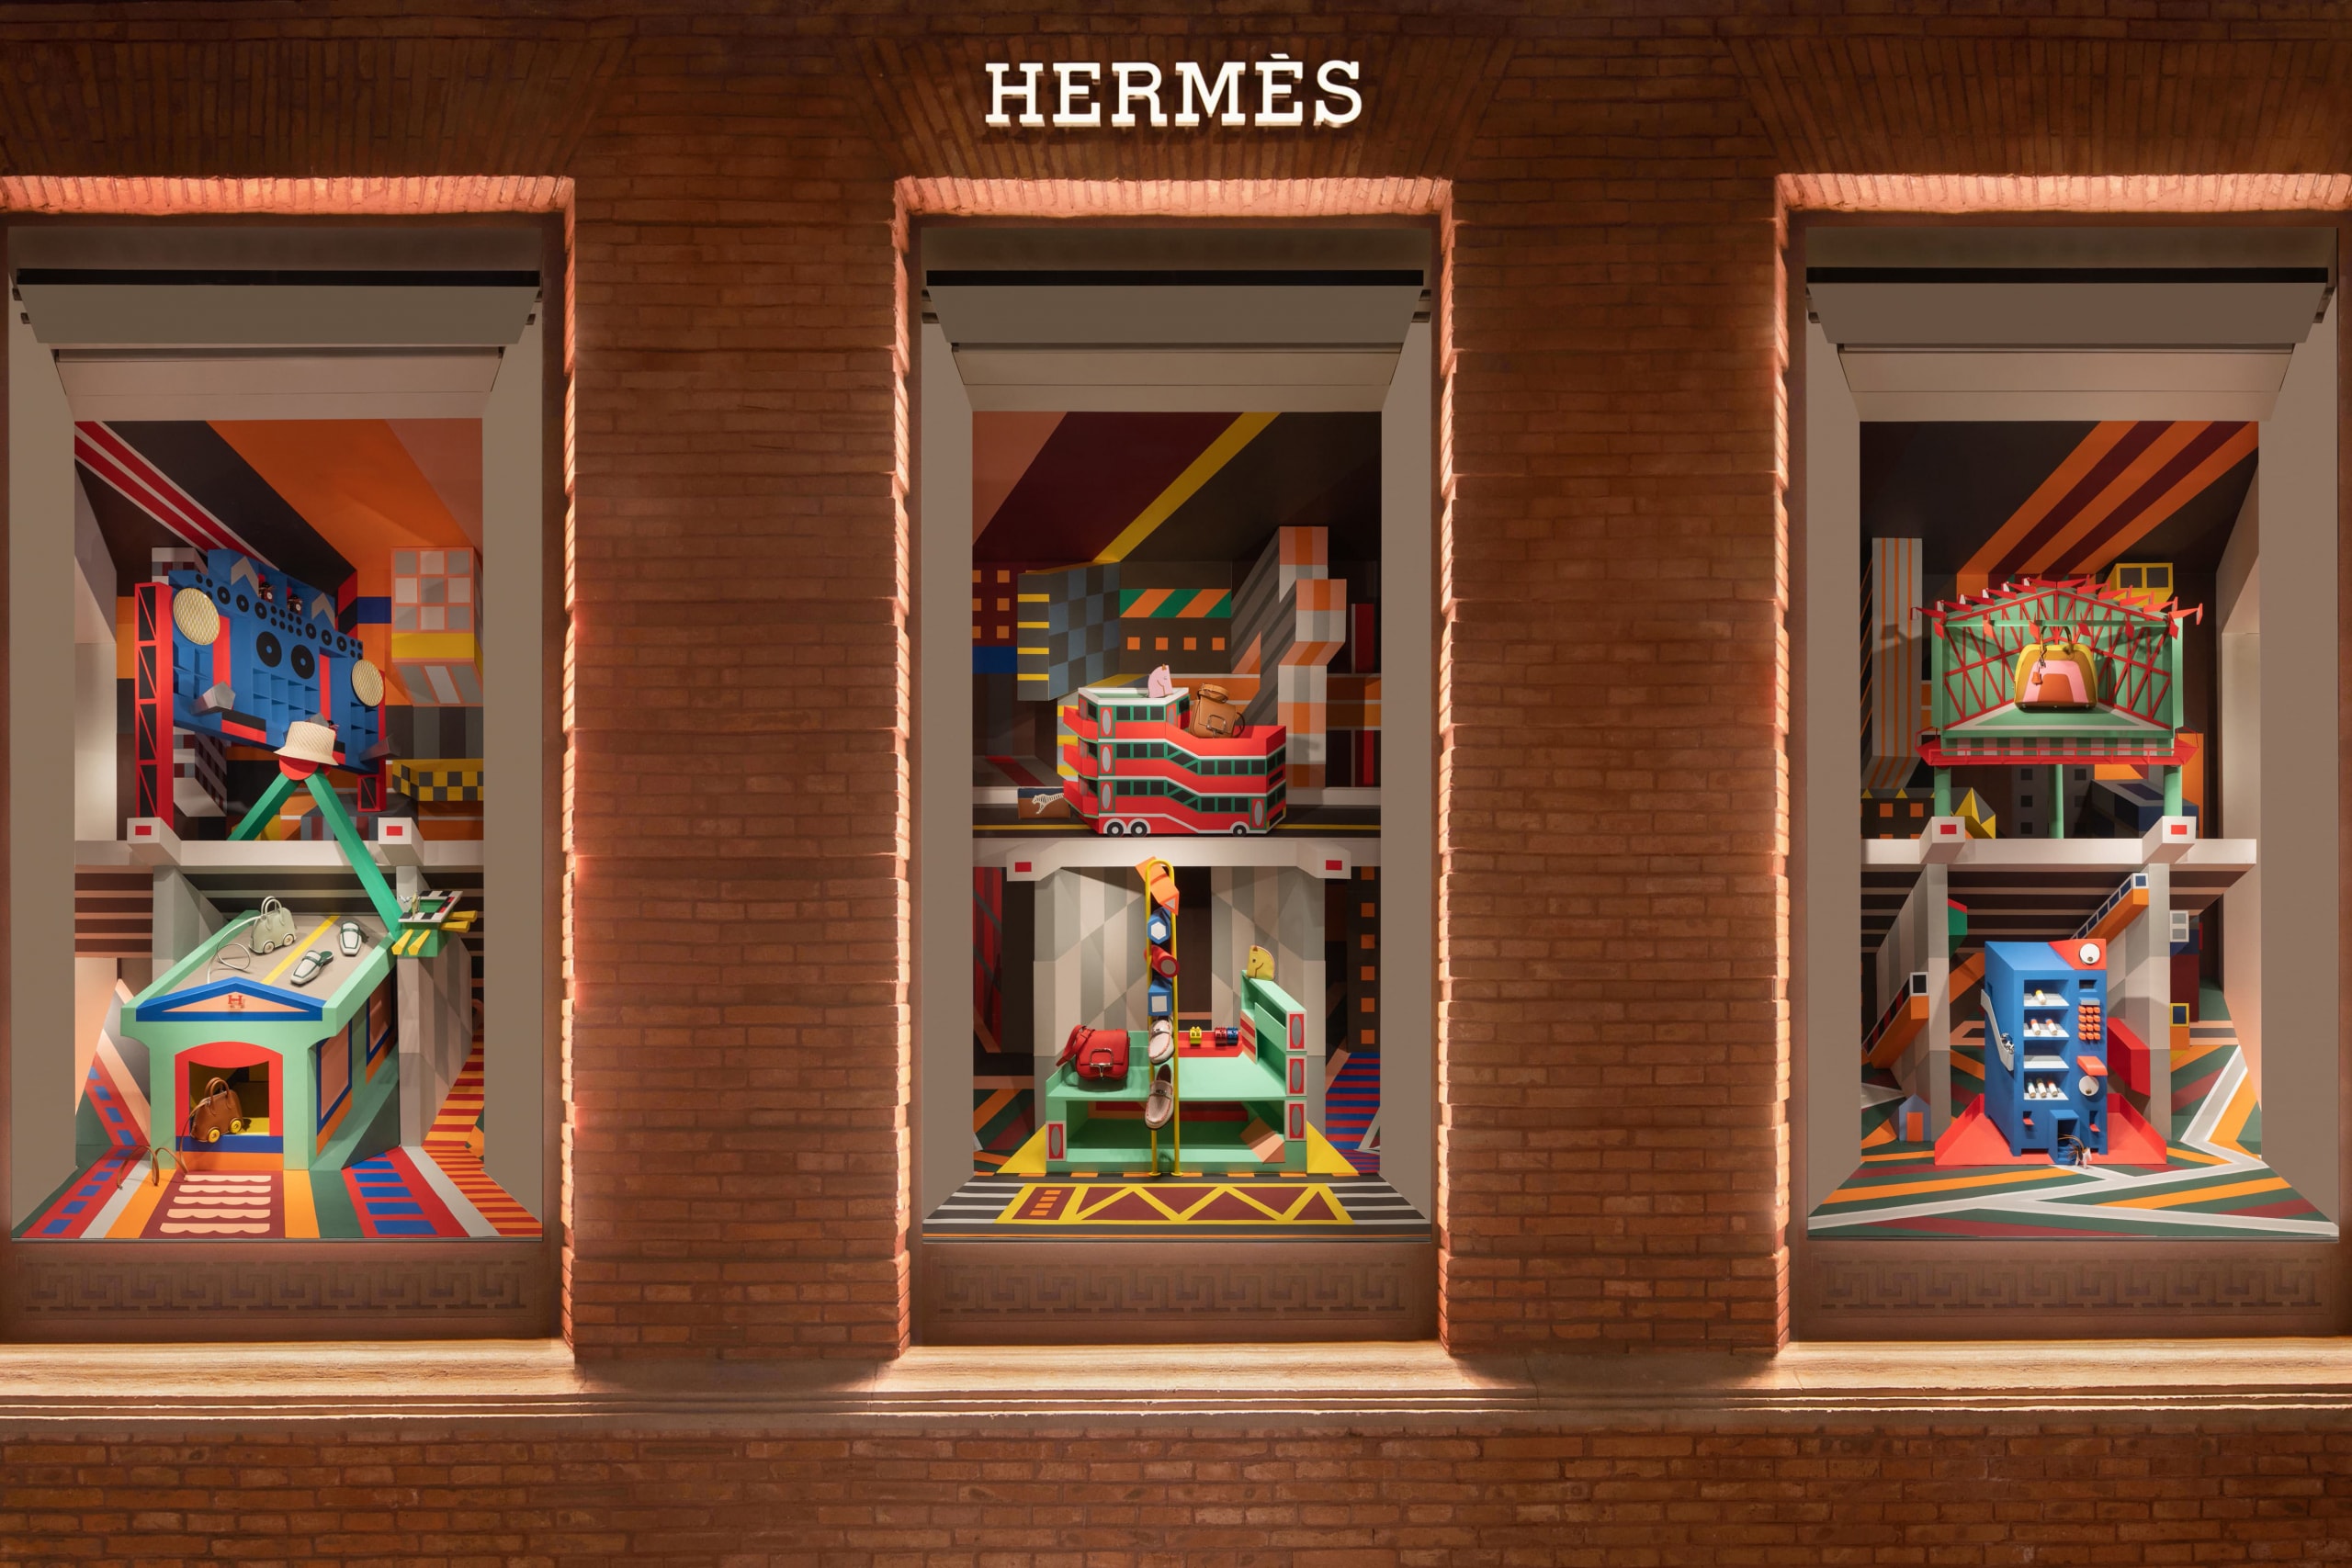 HERMÈS 邀请中国艺术家李涵为上海「爱马仕之家」打造《仕物别景》夏季橱窗与《生活模型》艺术展